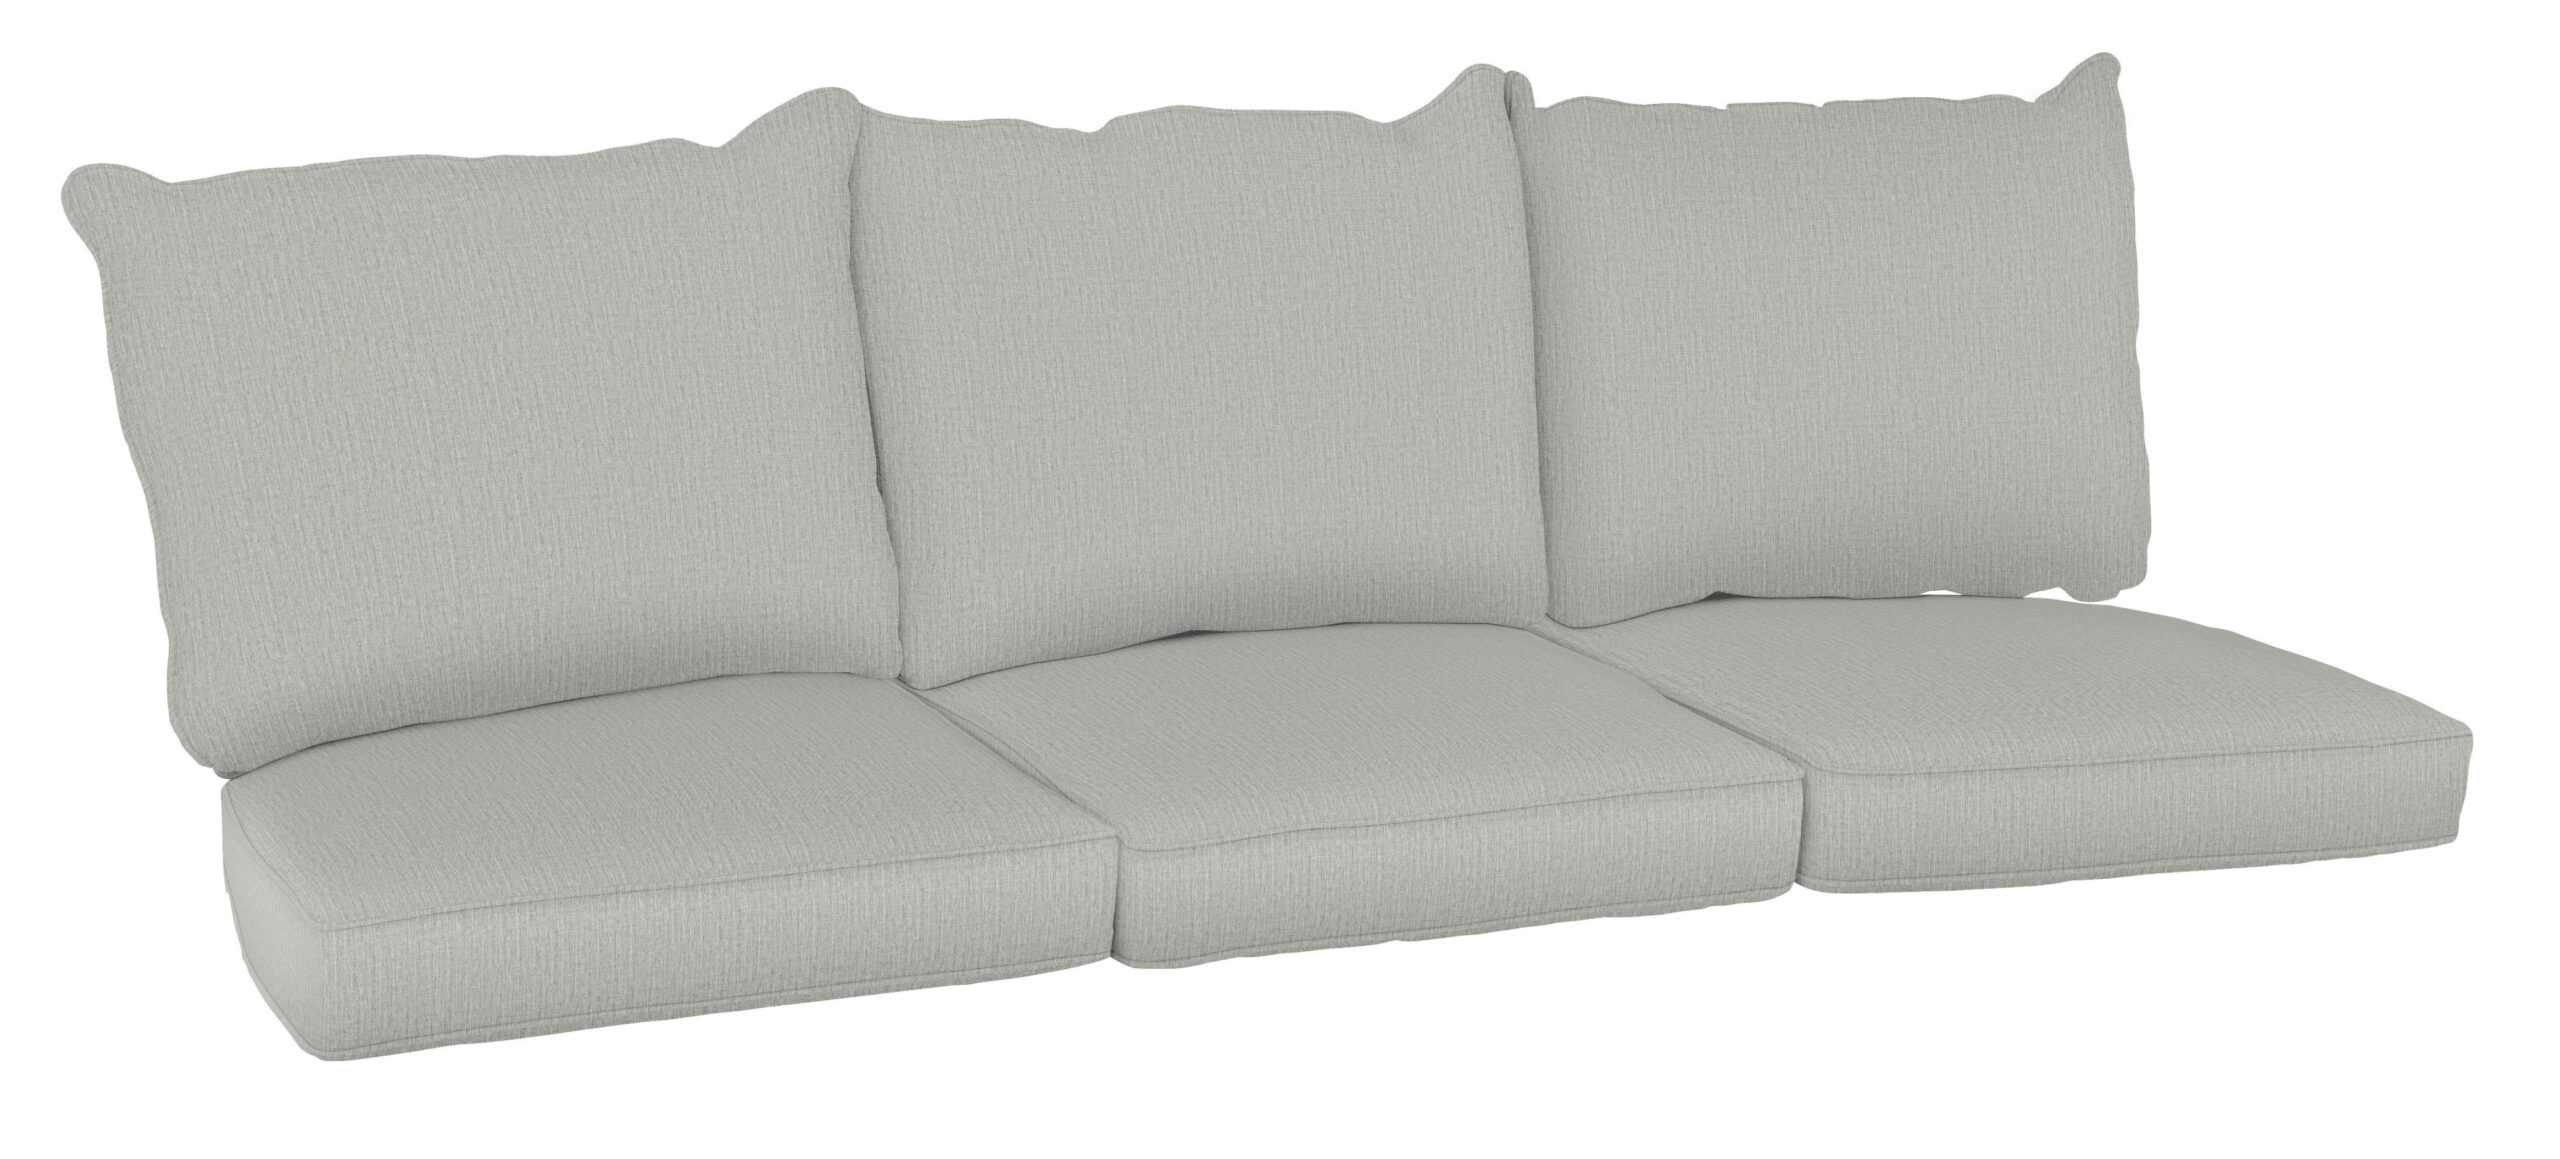 Kingsley Bate Sag Harbor Sofa Deep Seating Cushions